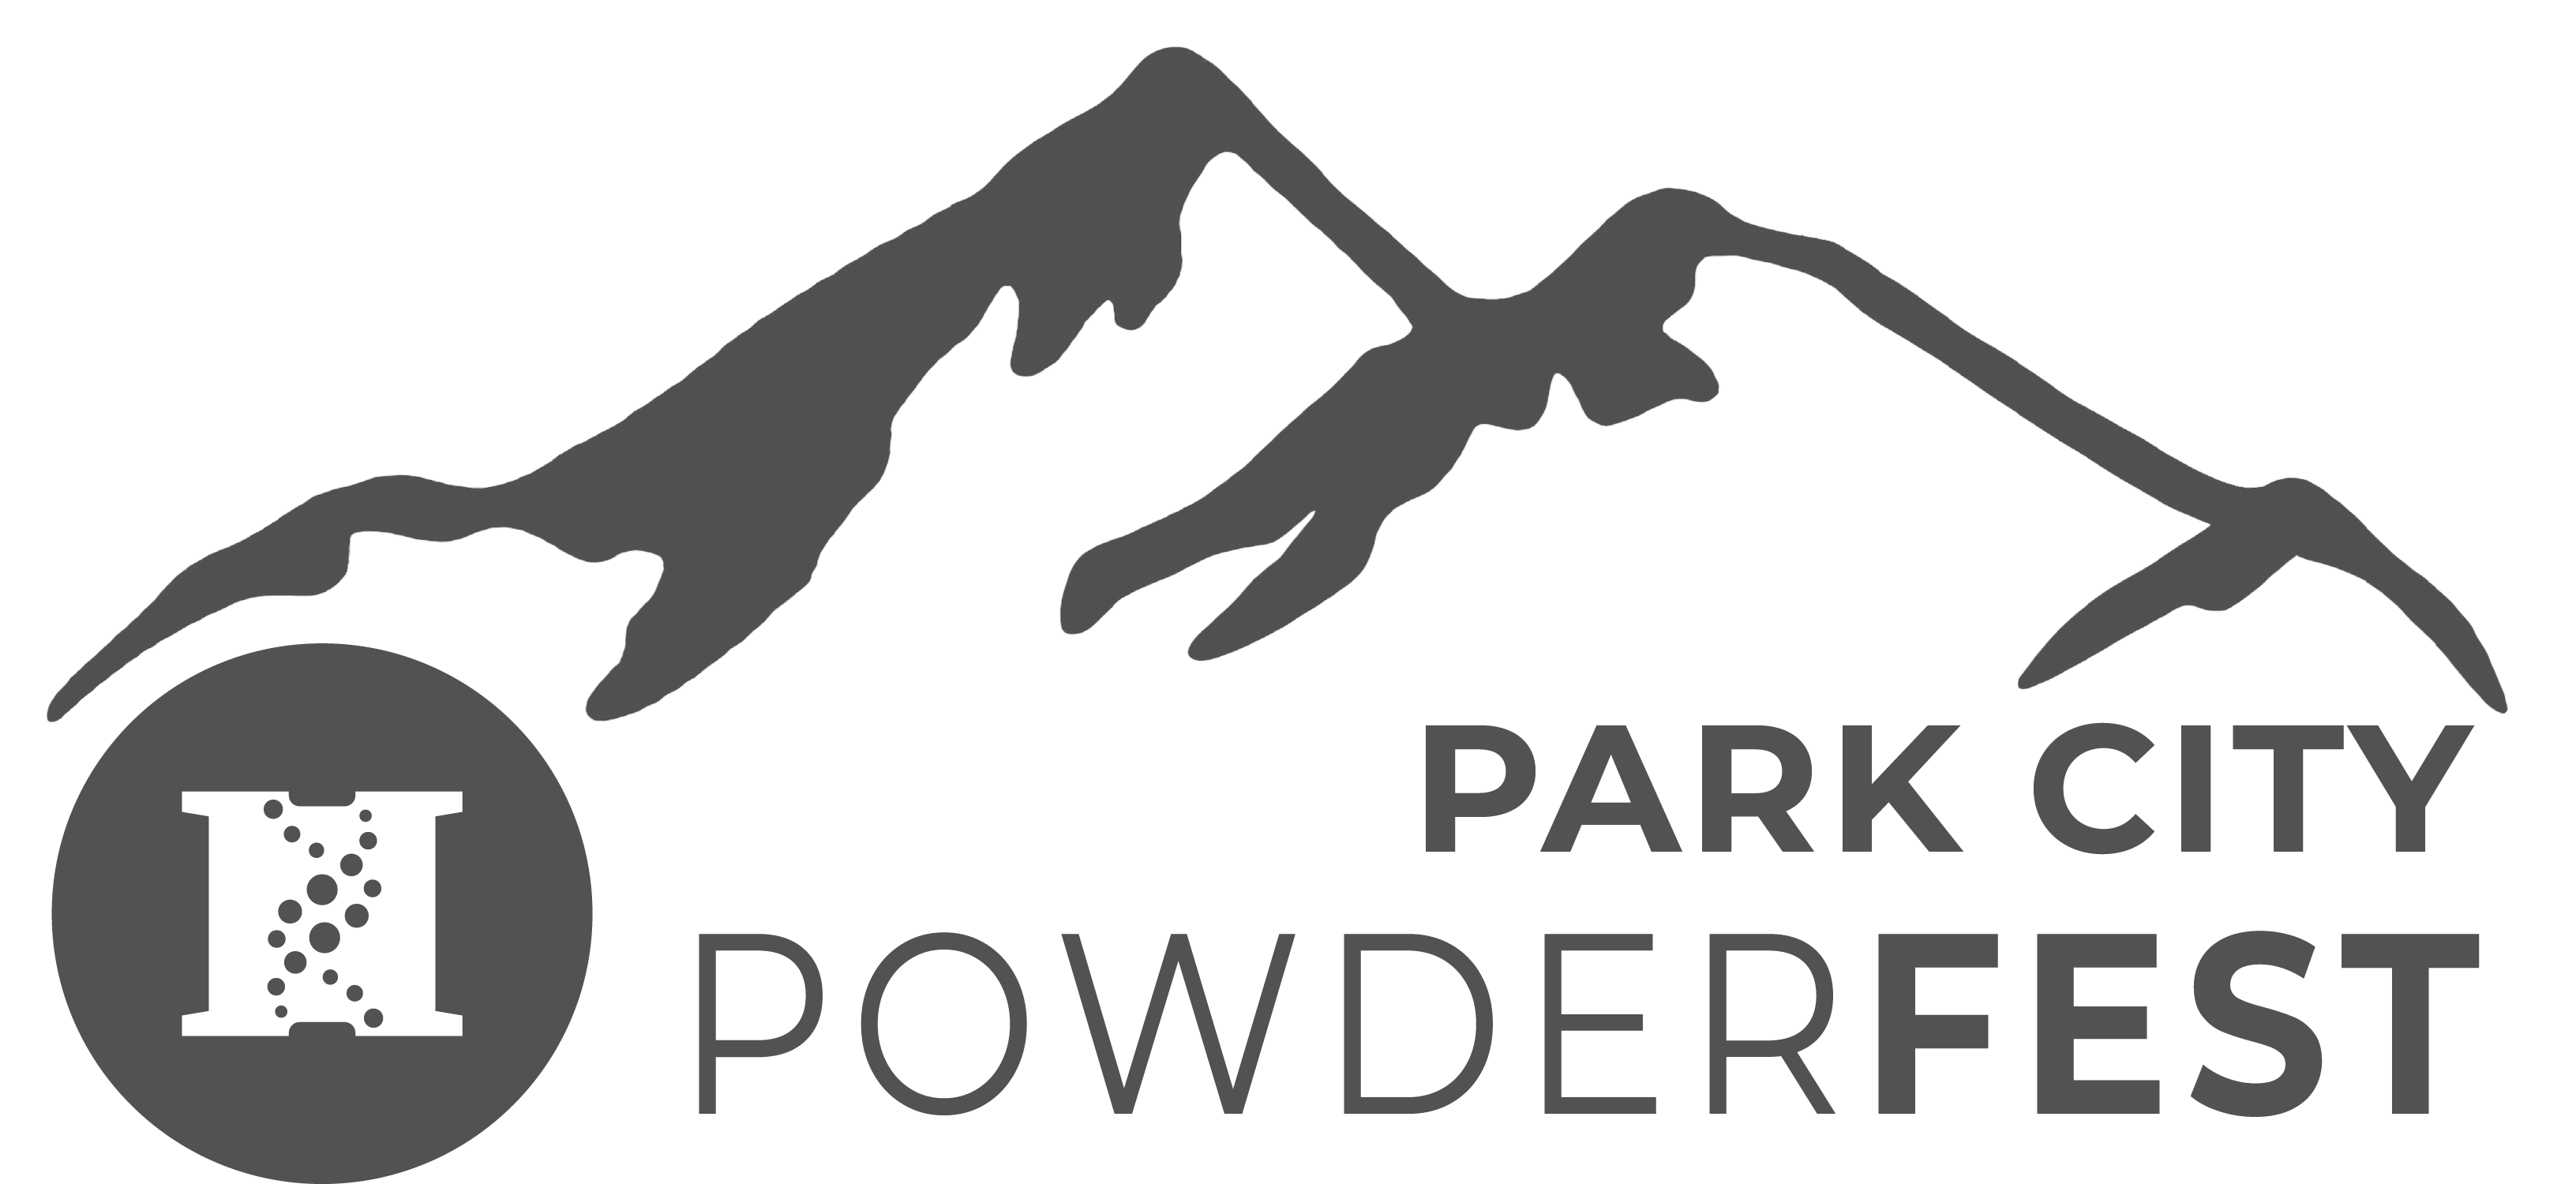 Park City PowderFest